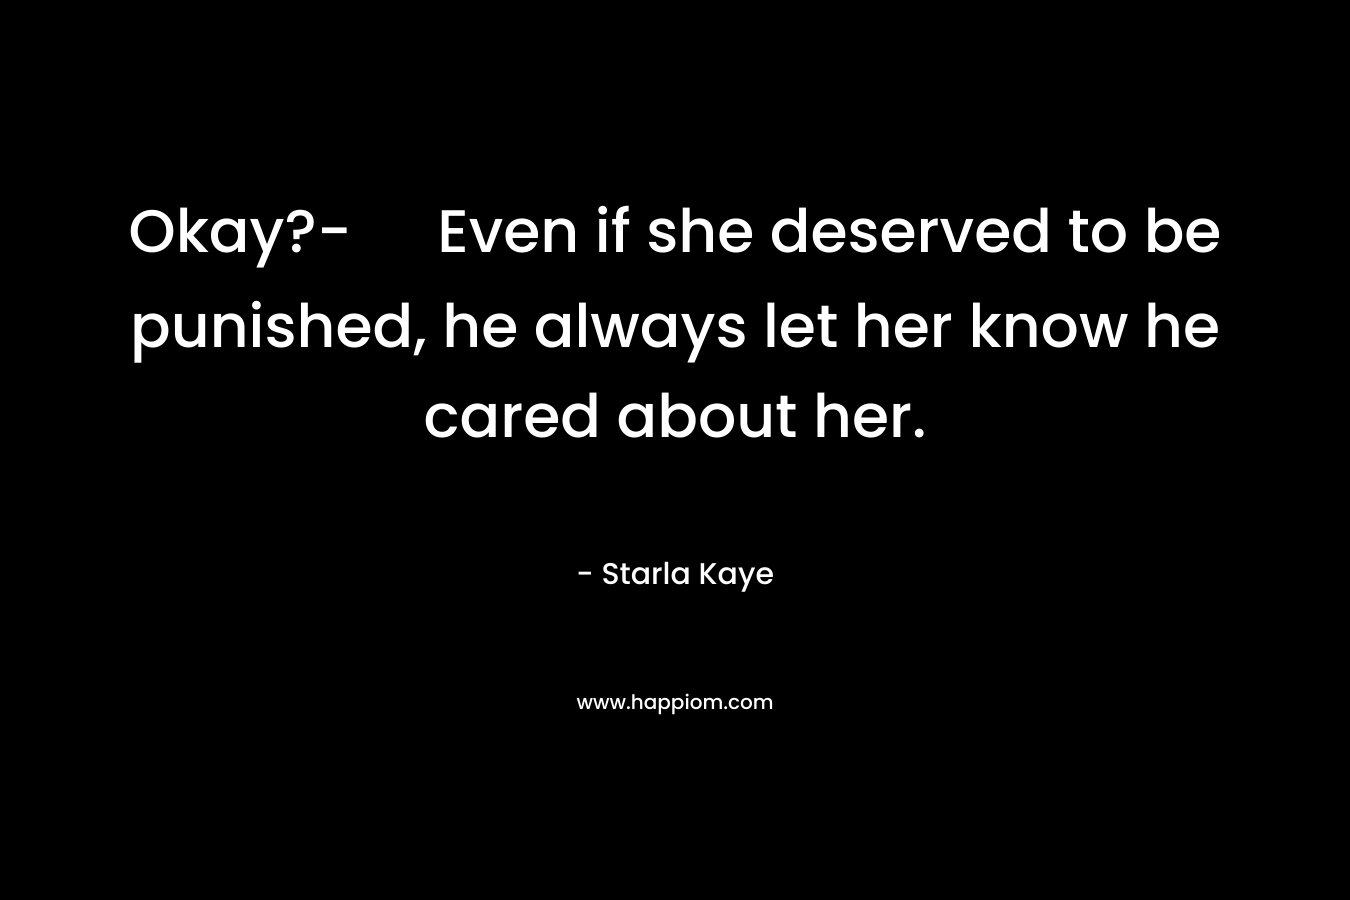 Okay?- Even if she deserved to be punished, he always let her know he cared about her. – Starla Kaye